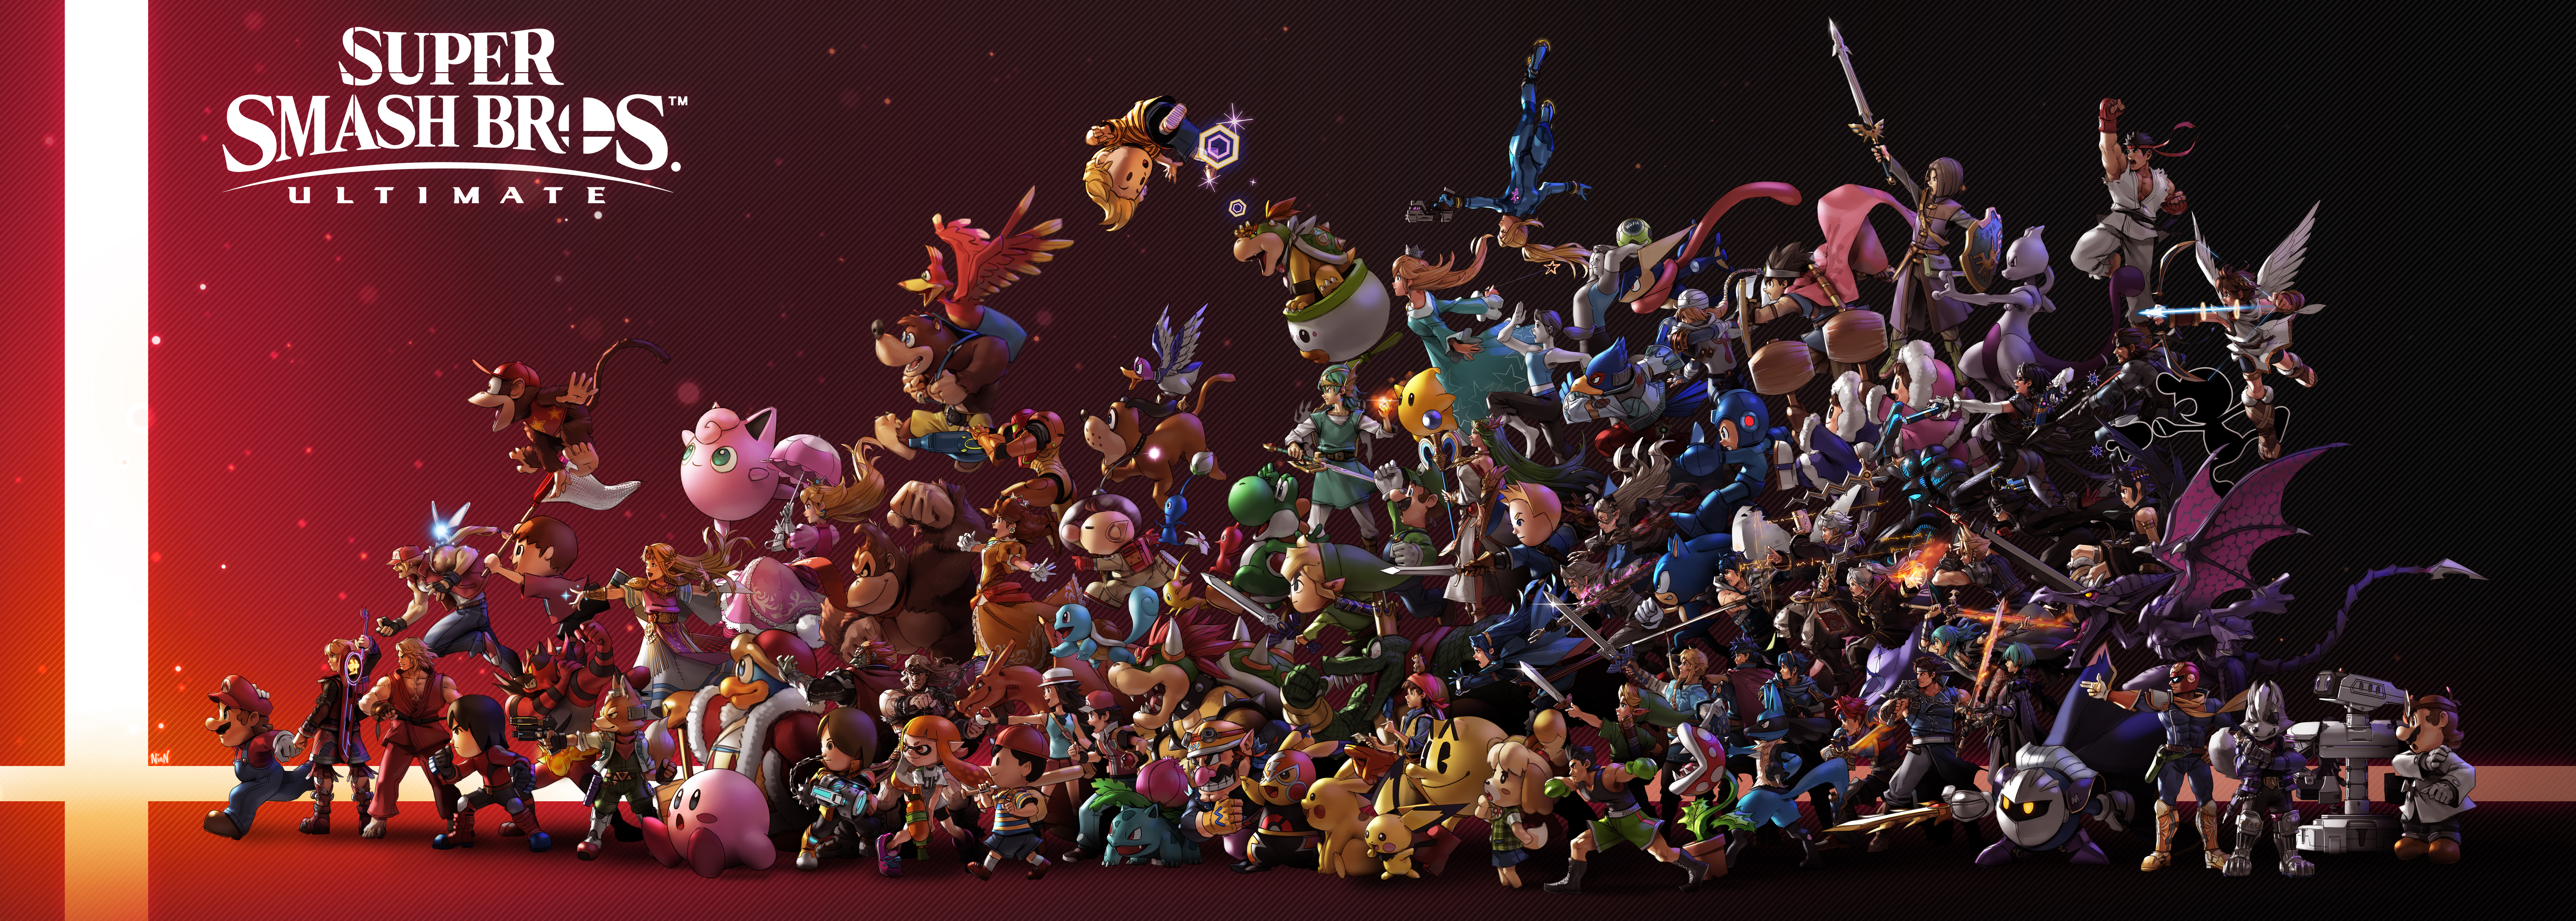 Super Smash Bros. Ultimate Everyone is Here! by Callum Nakajima